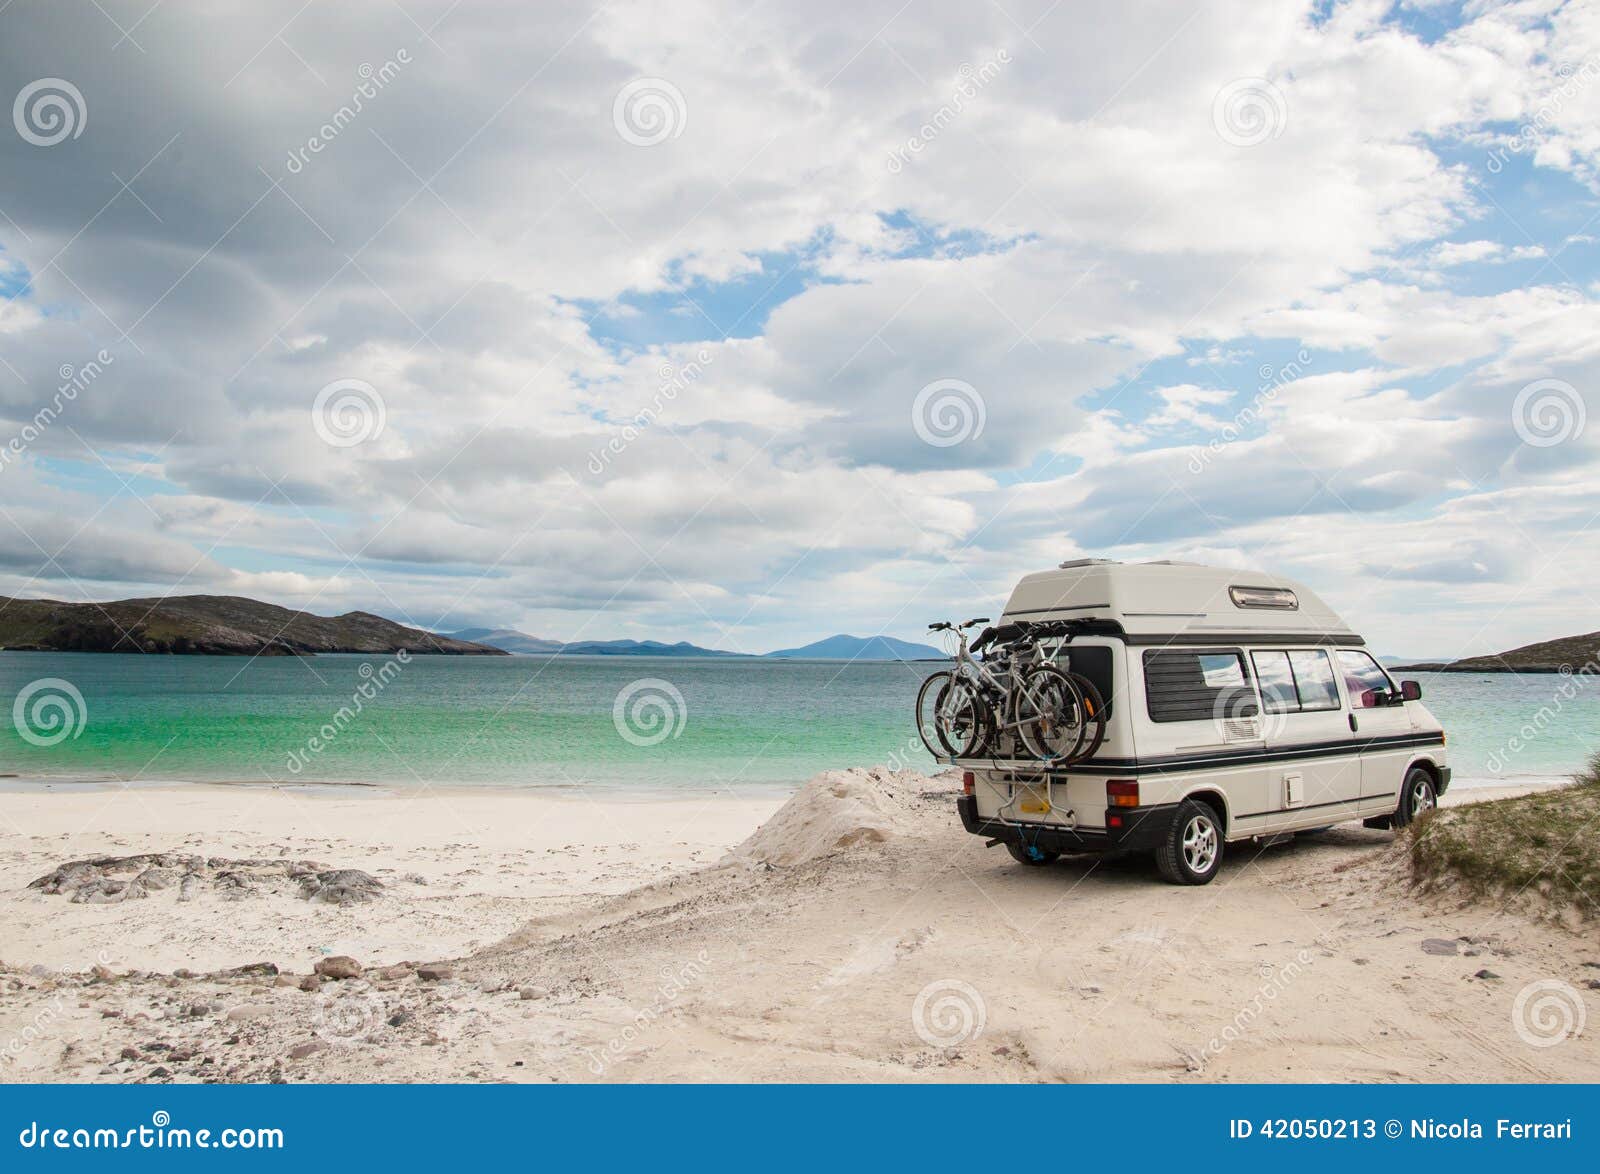 camper van parked on a beach in the isle of lewis